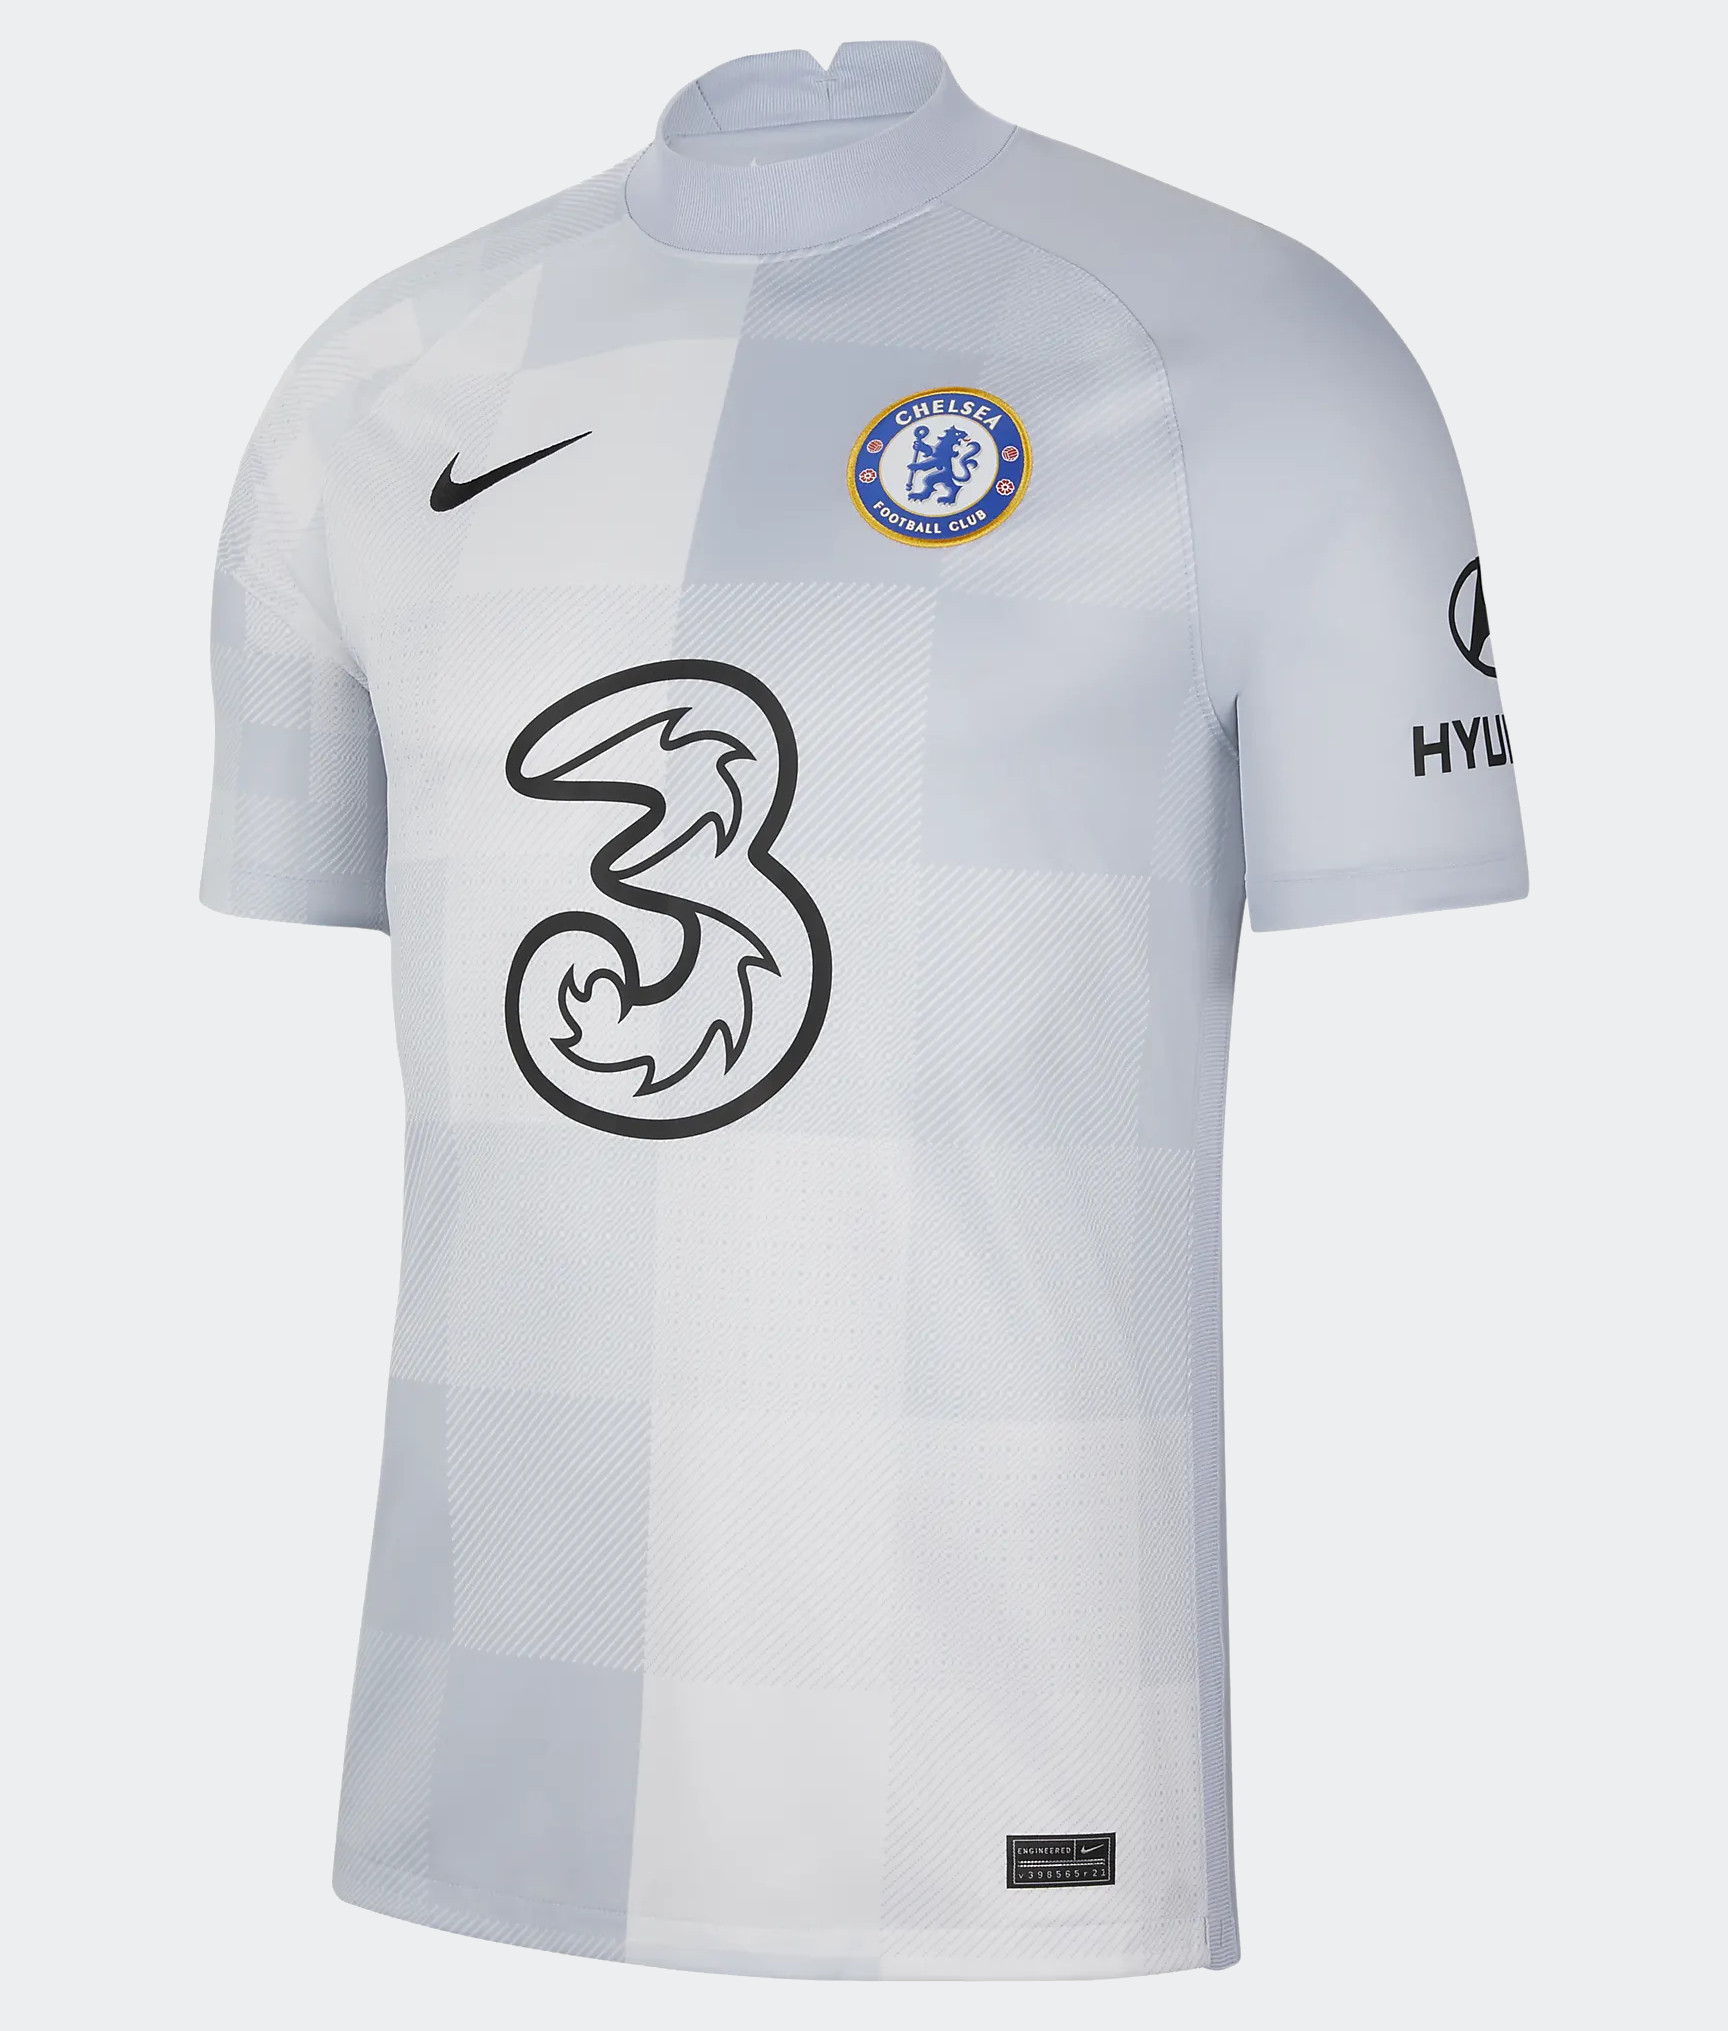 String string Gewend zelfmoord Chelsea keepersshirt 2021-2022 - Voetbalshirts.com